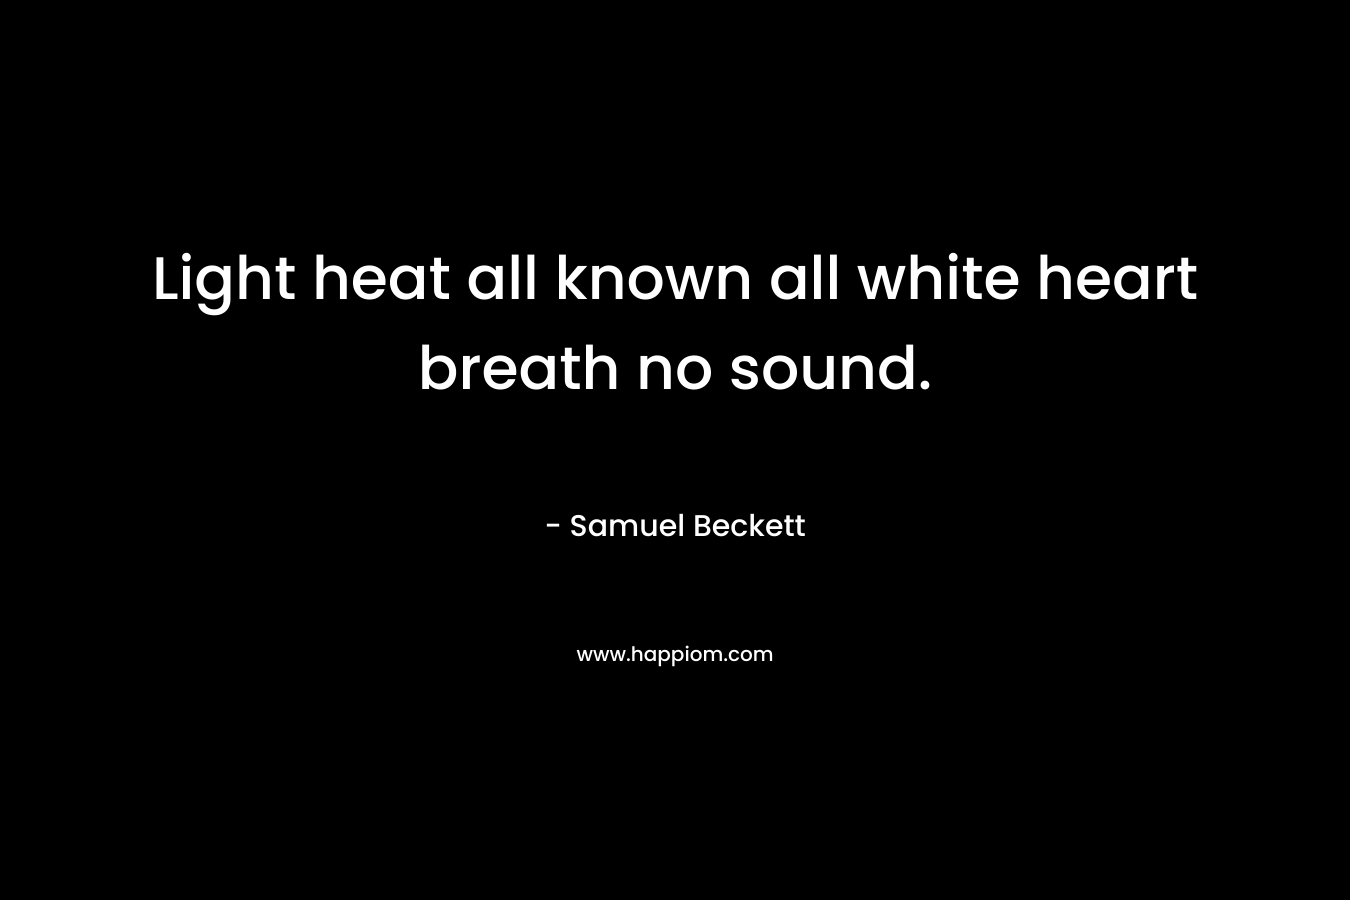 Light heat all known all white heart breath no sound.